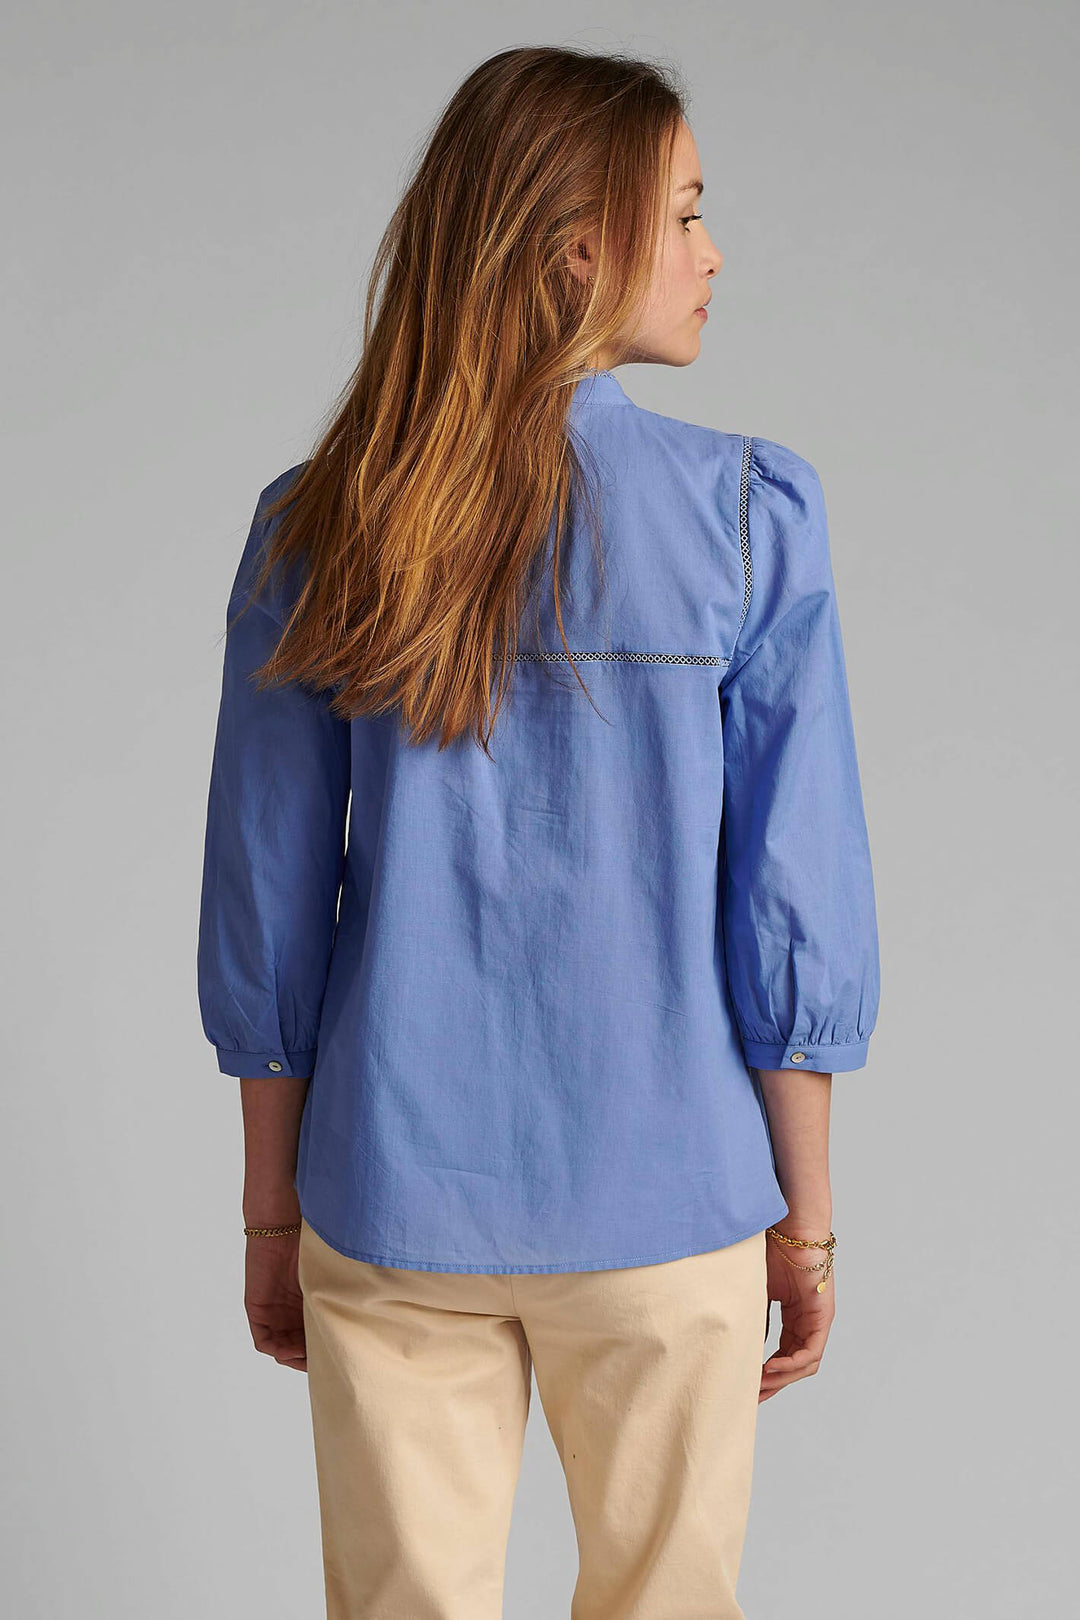 Numph 700385 Nucindy Shirt Wedgewood Blue - Shirley Allum#colour_wedgewood-3075-blue